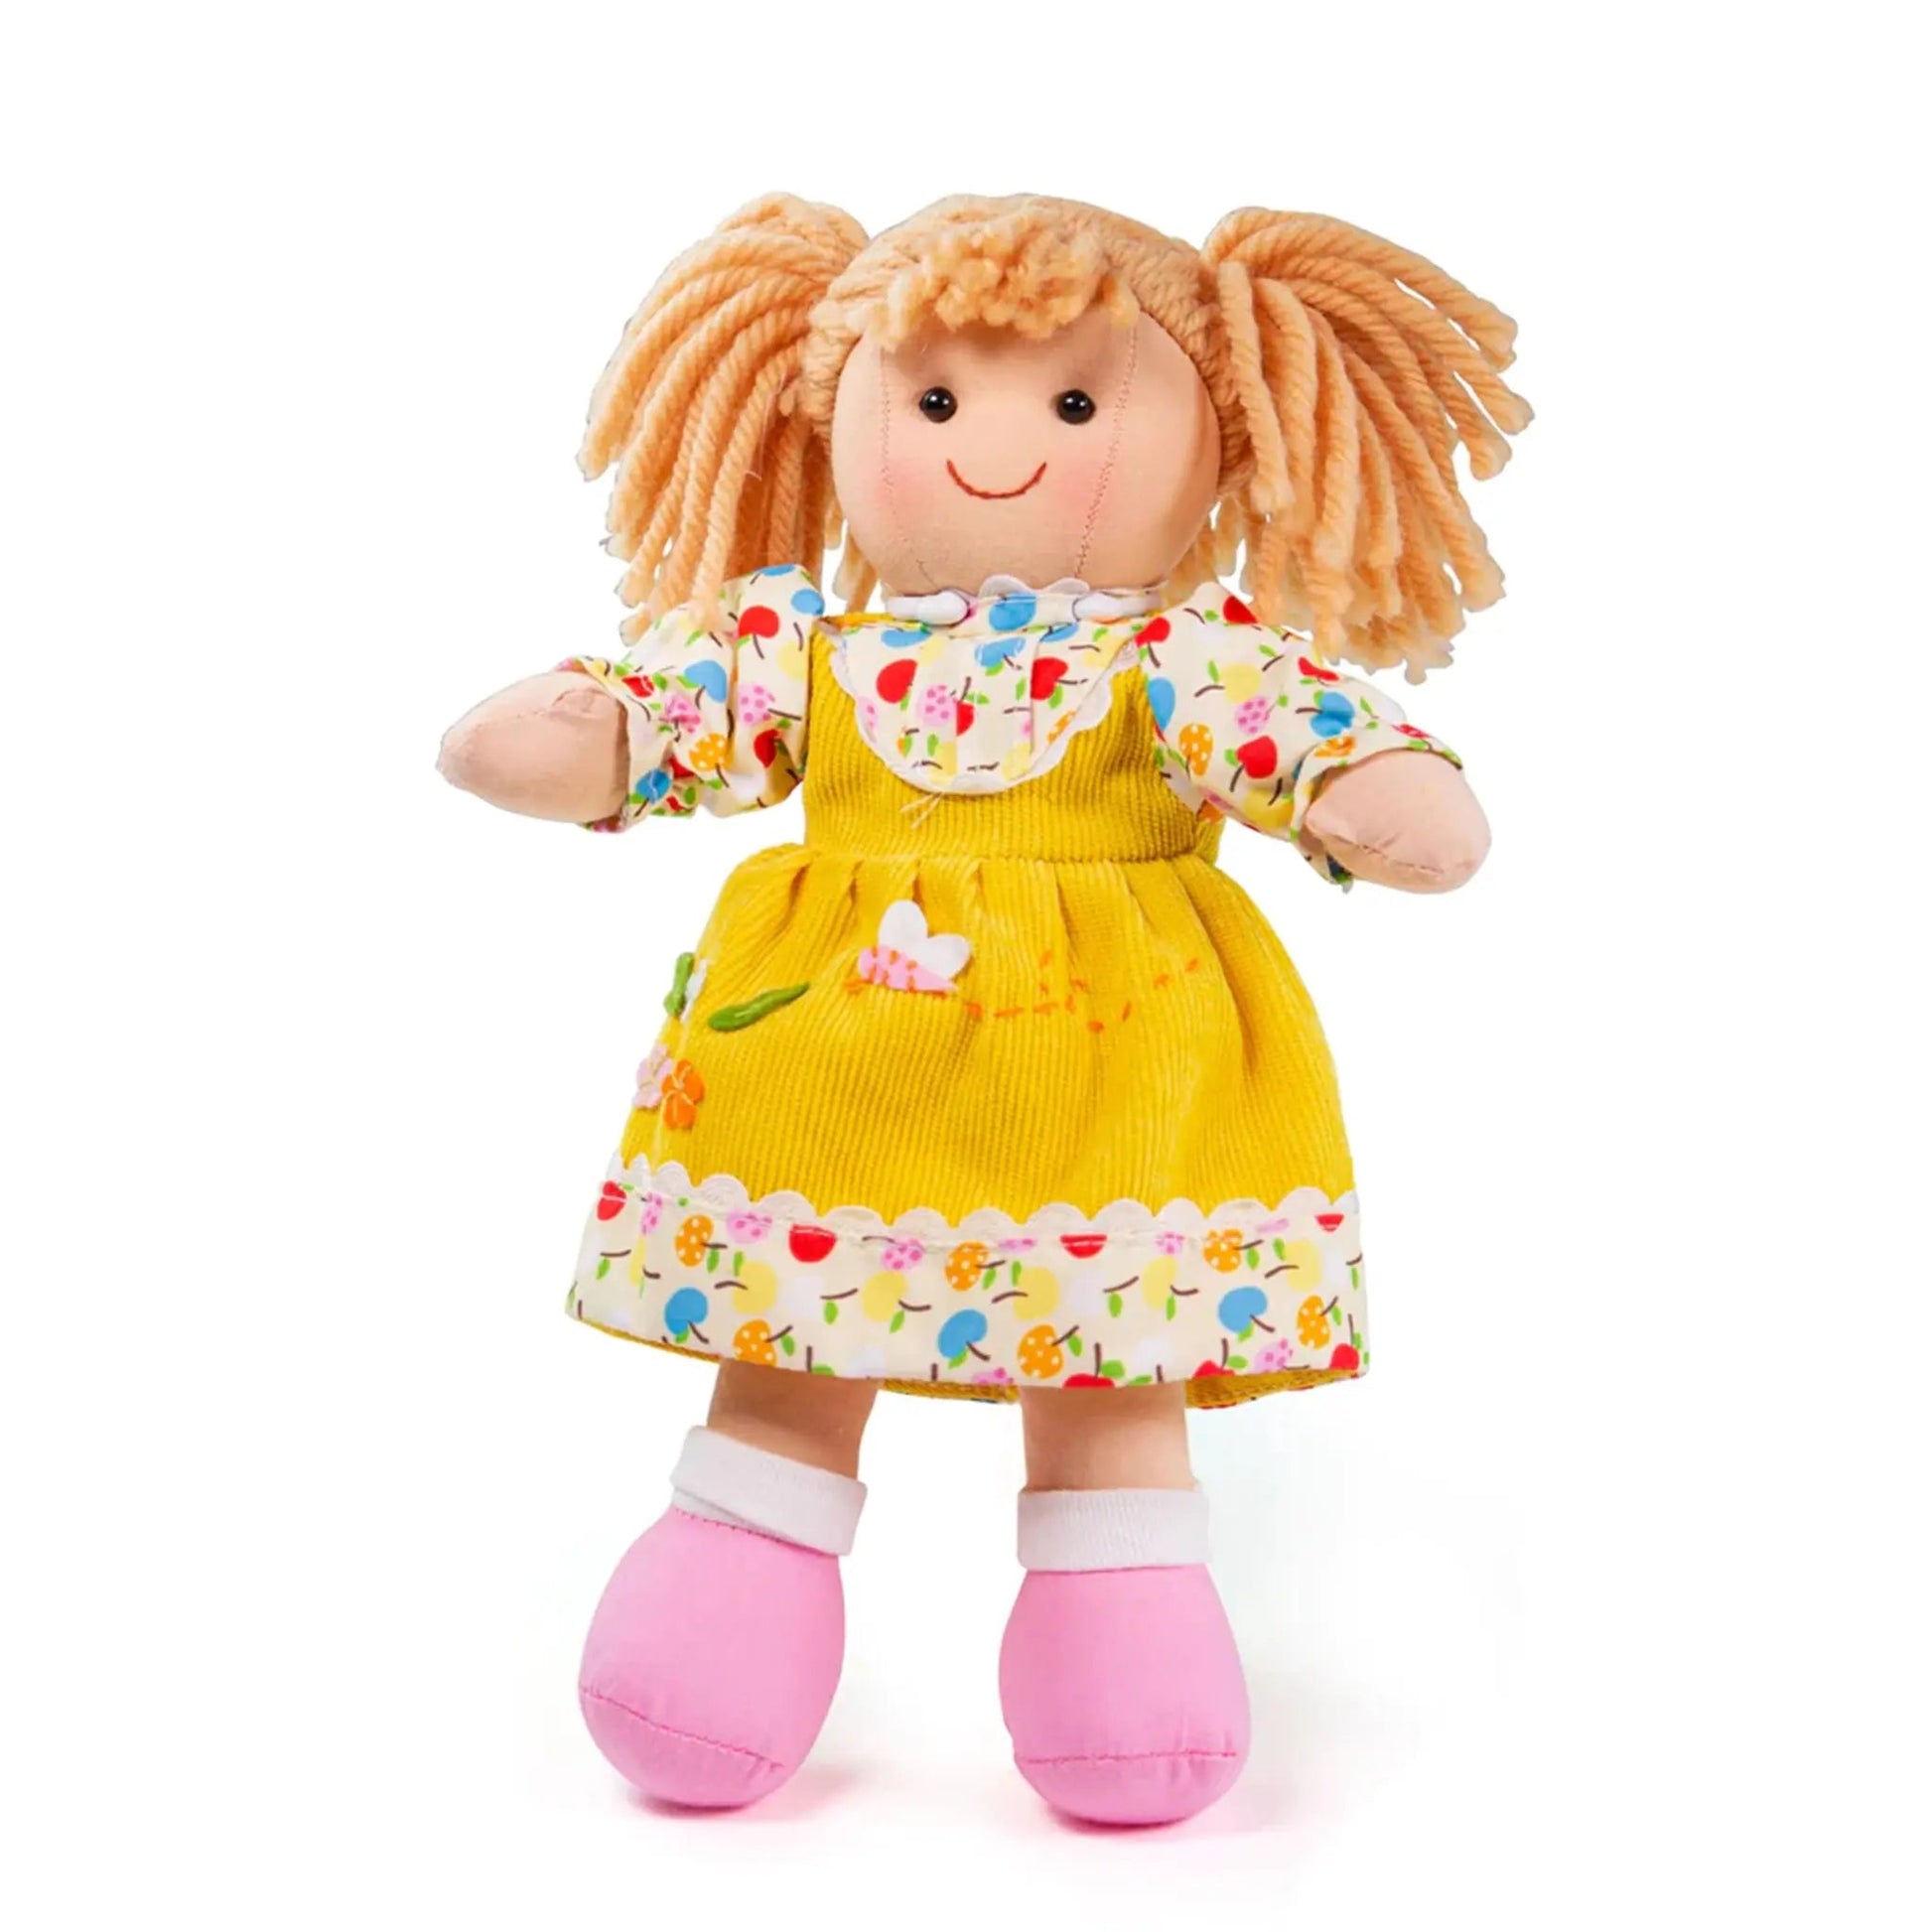 Daisy Rag Doll - Bigjigs Toys - The Forgotten Toy Shop